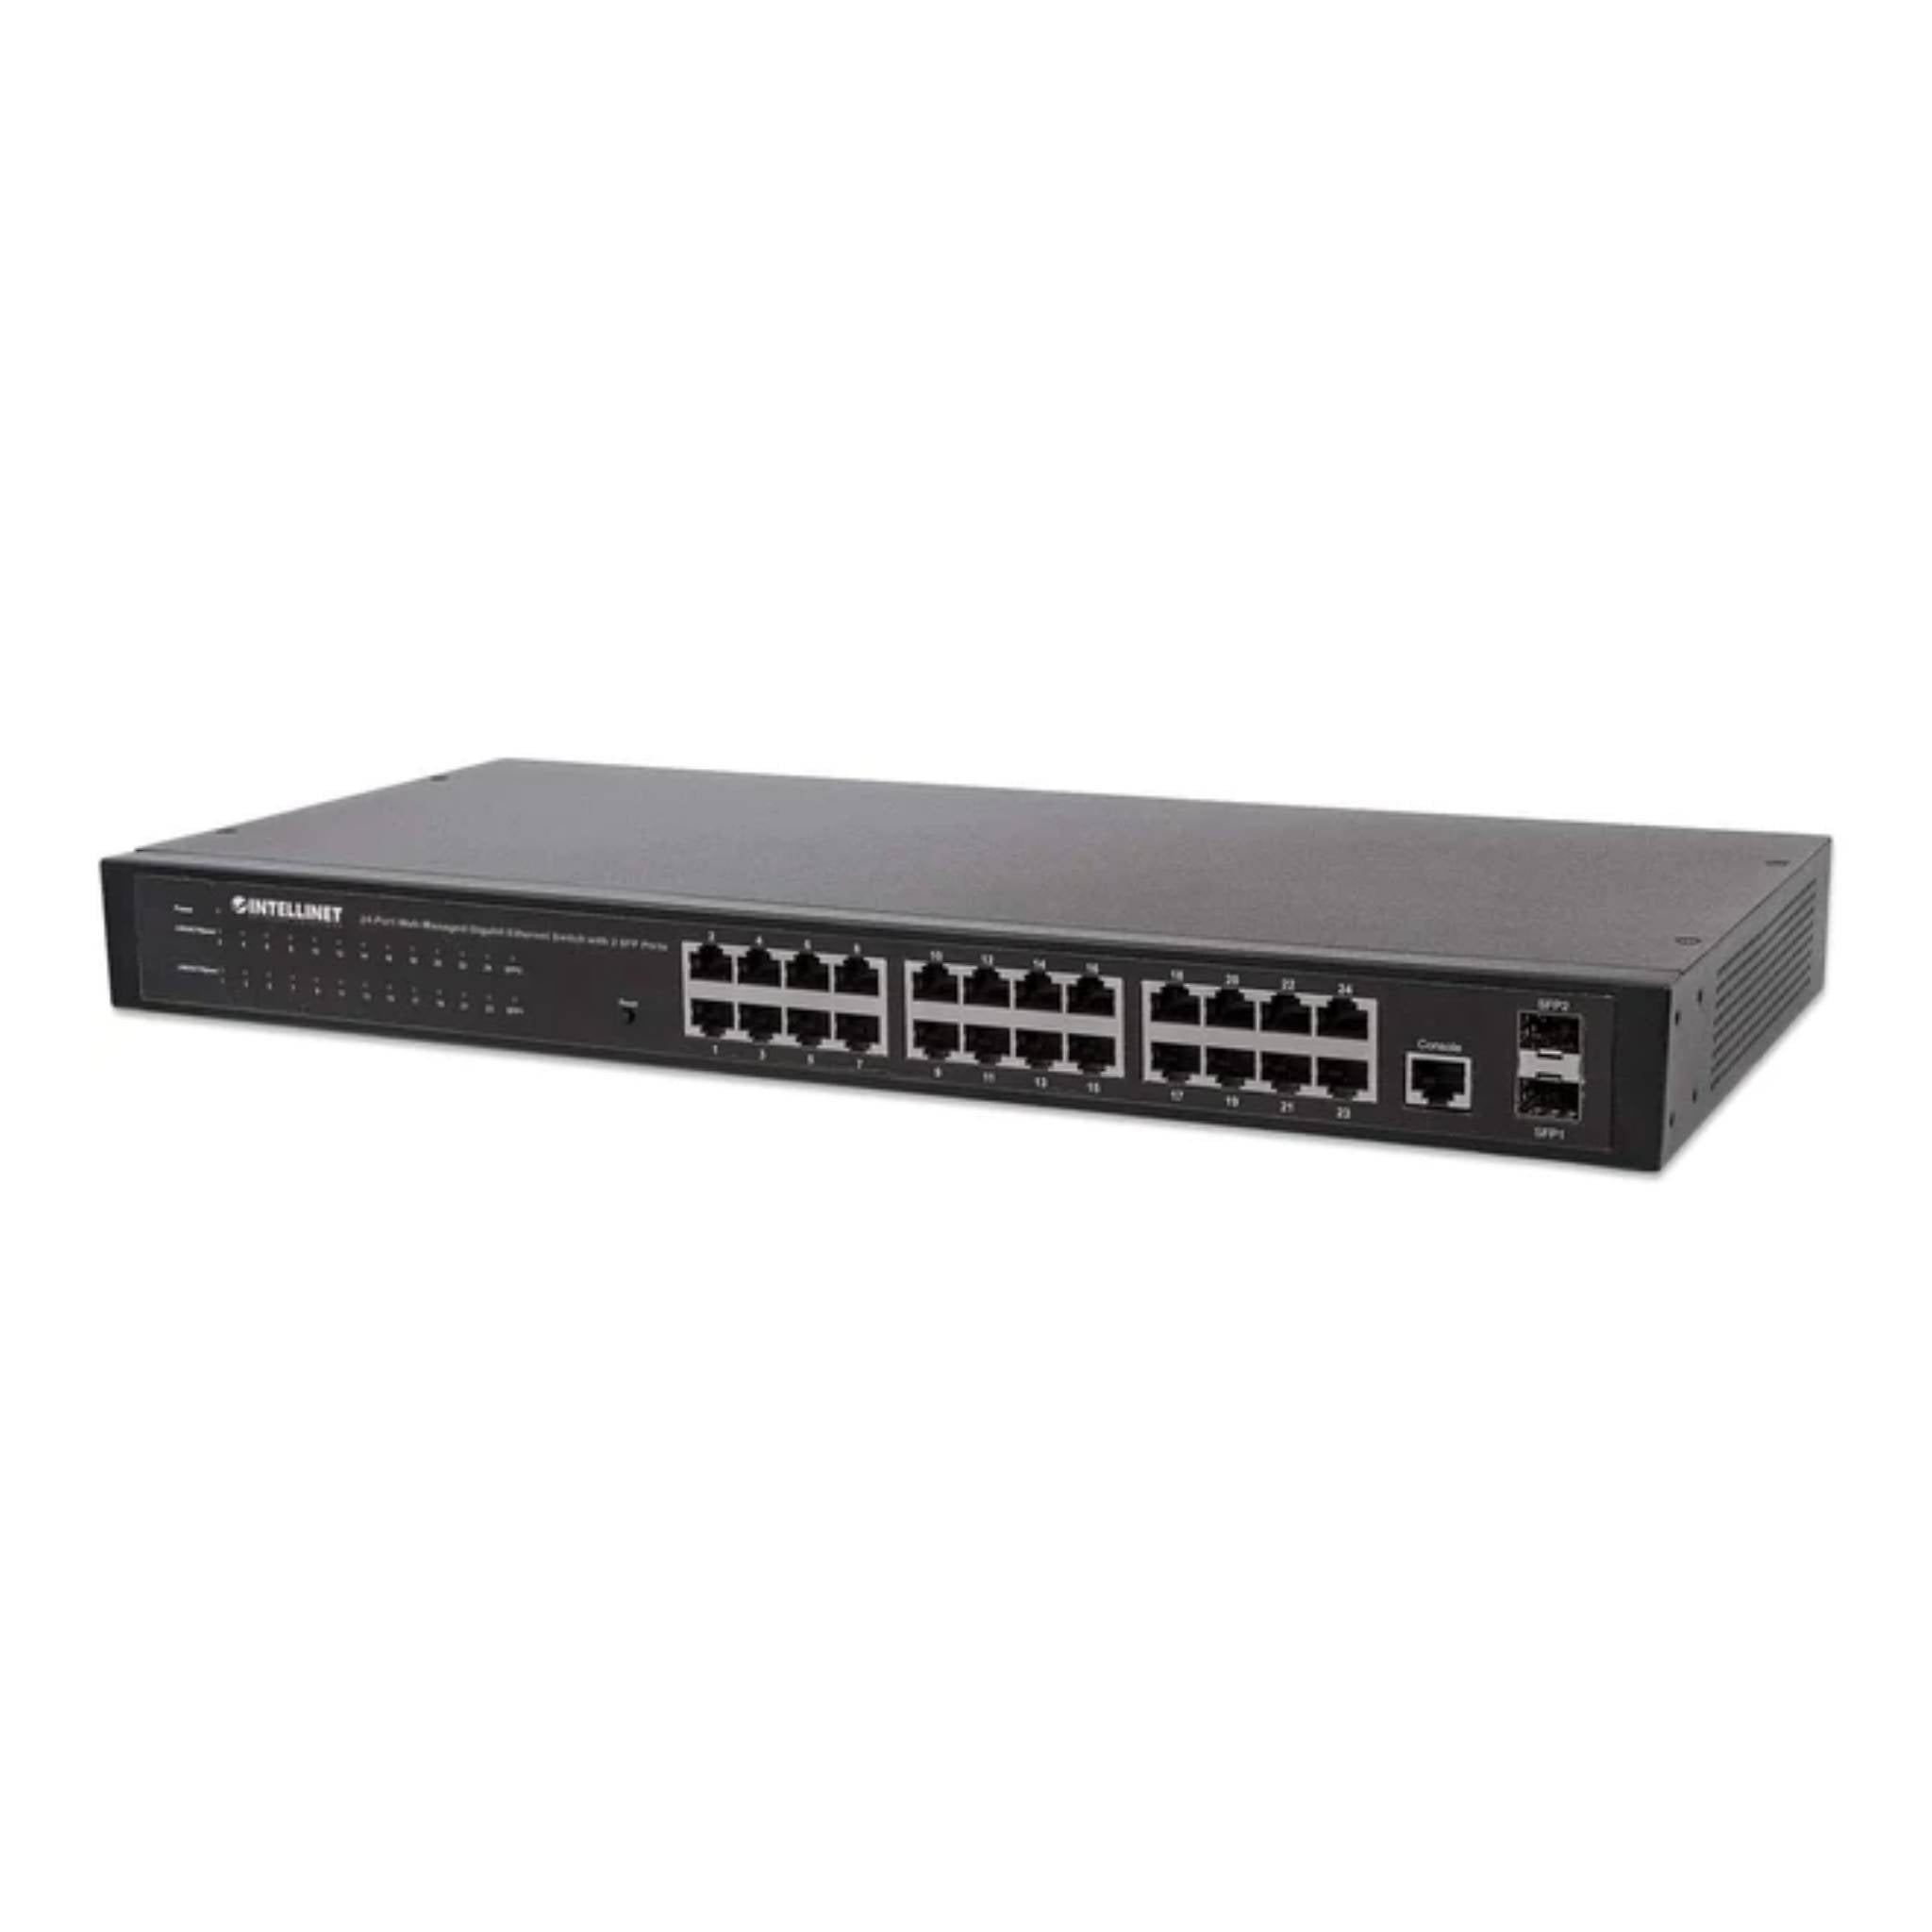 Intellinet 24-Port Web-Managed Gigabit Ethernet Switch with 2 SFP Ports